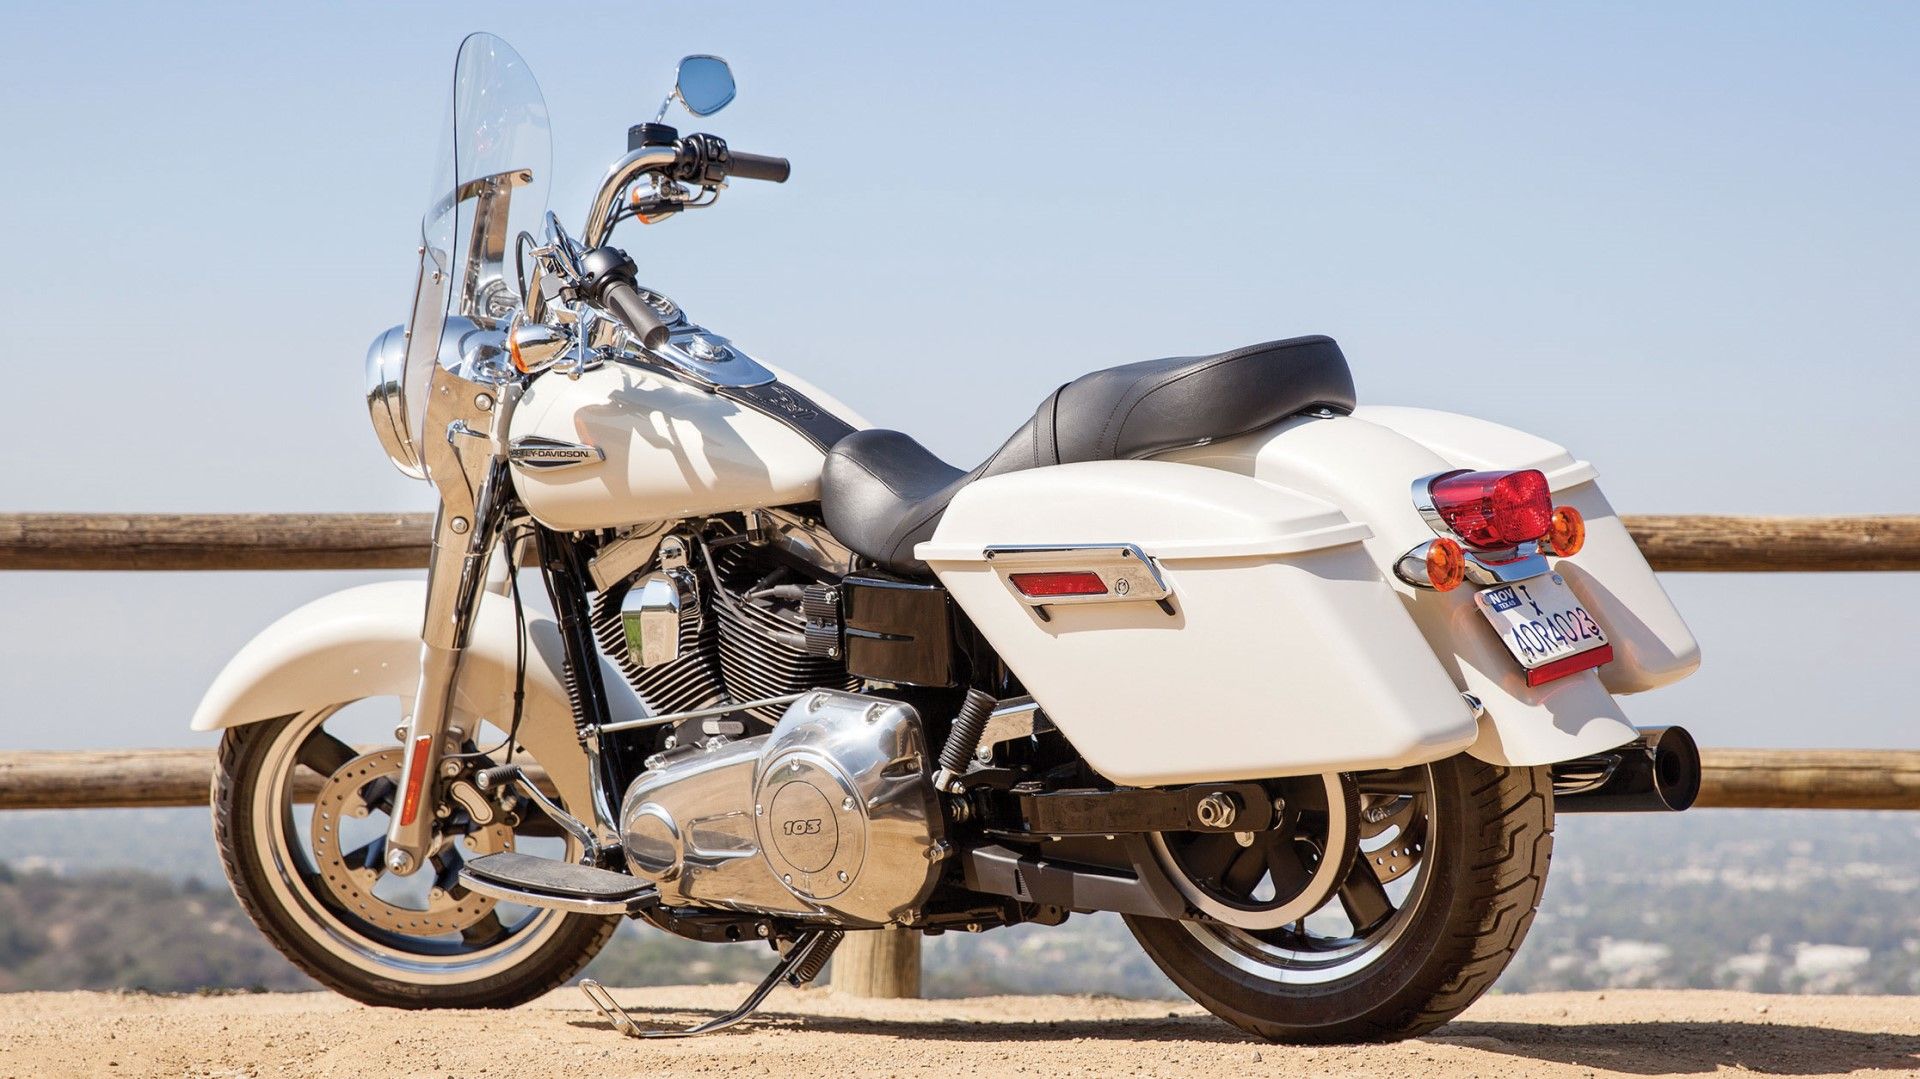 2014 Harley-Davidson Switchback in white rear third quarter view